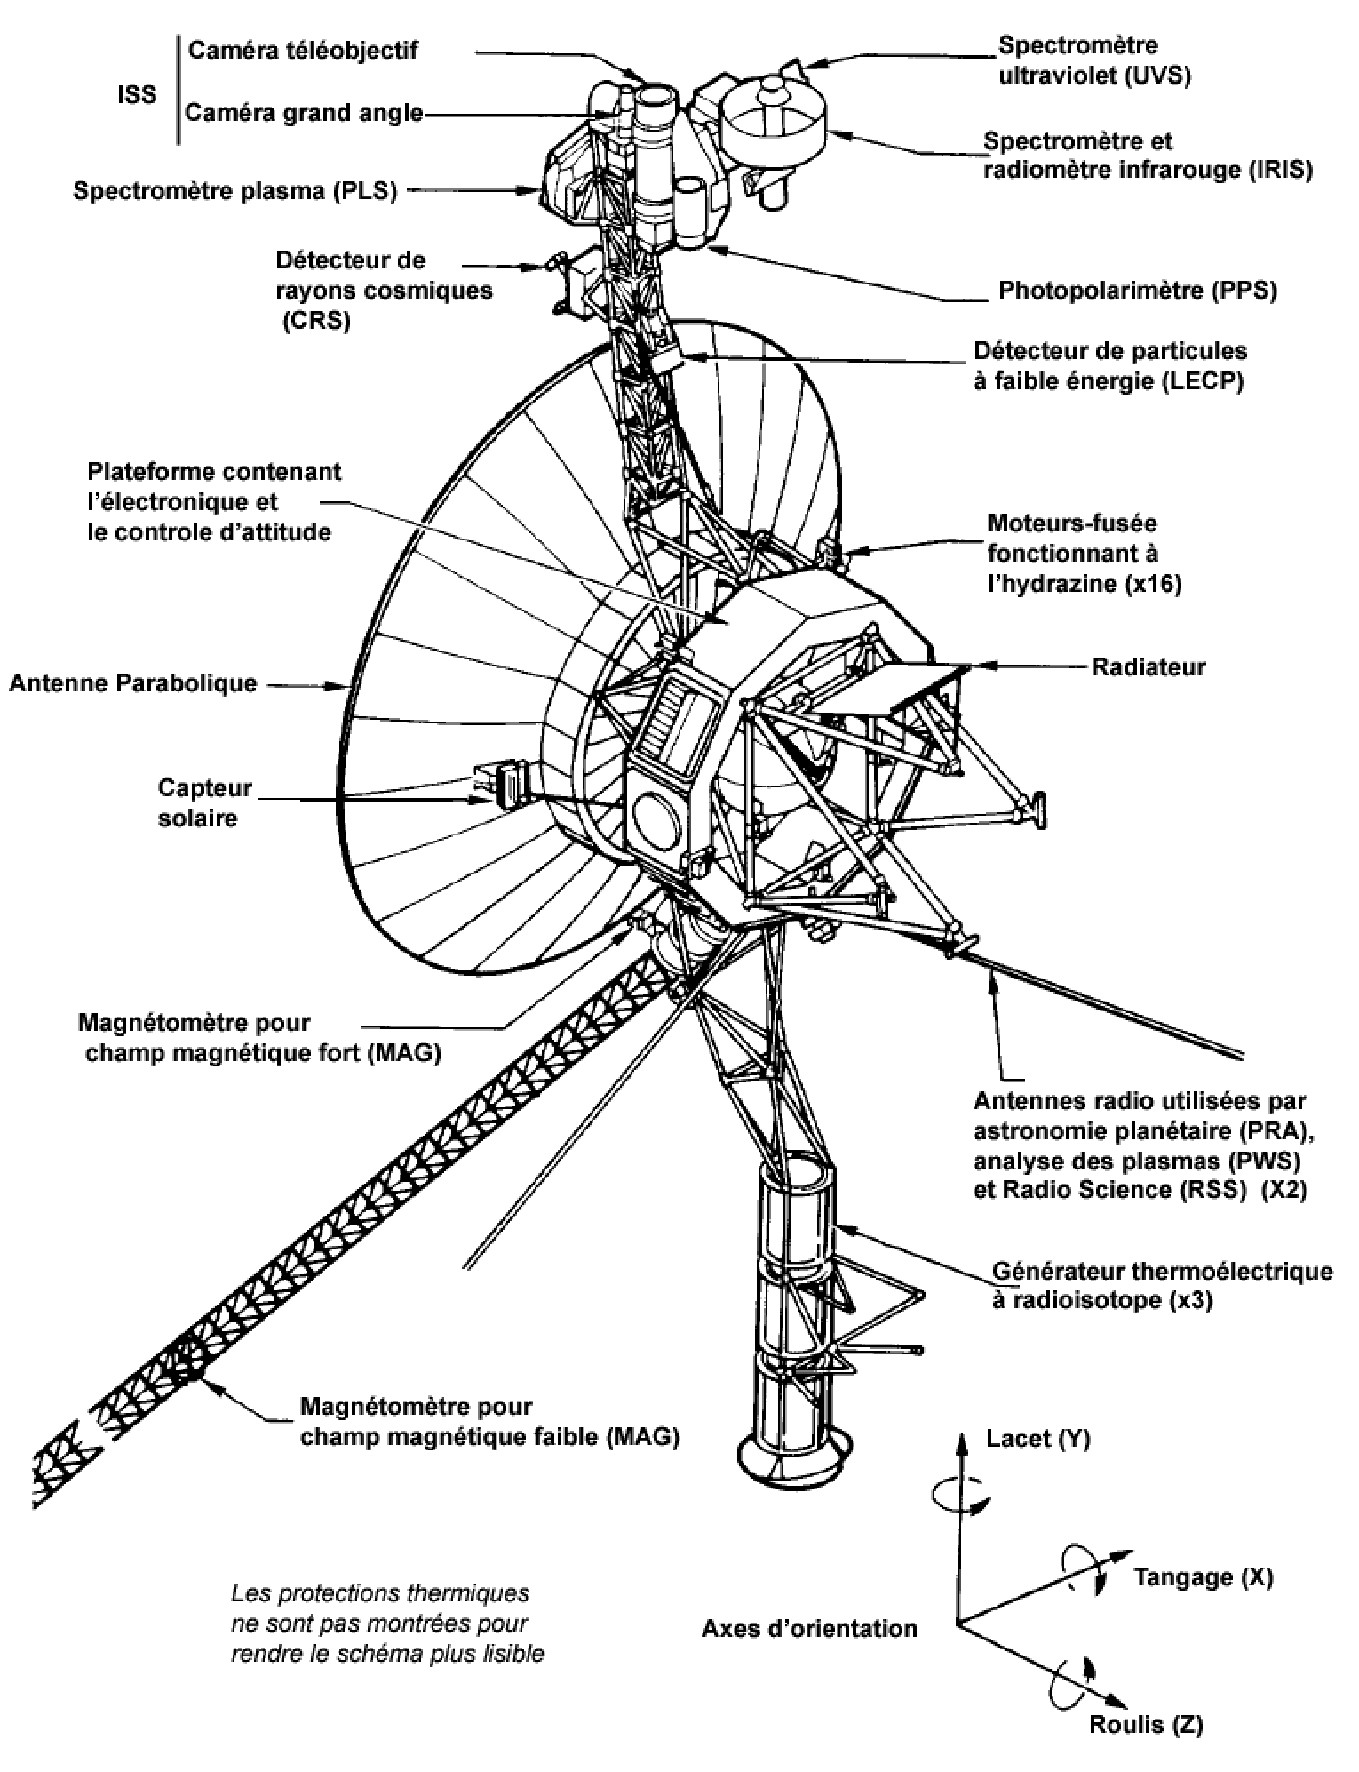 Voyager spacecraft, source : wikipedia.org/wiki/Programme_Voyager